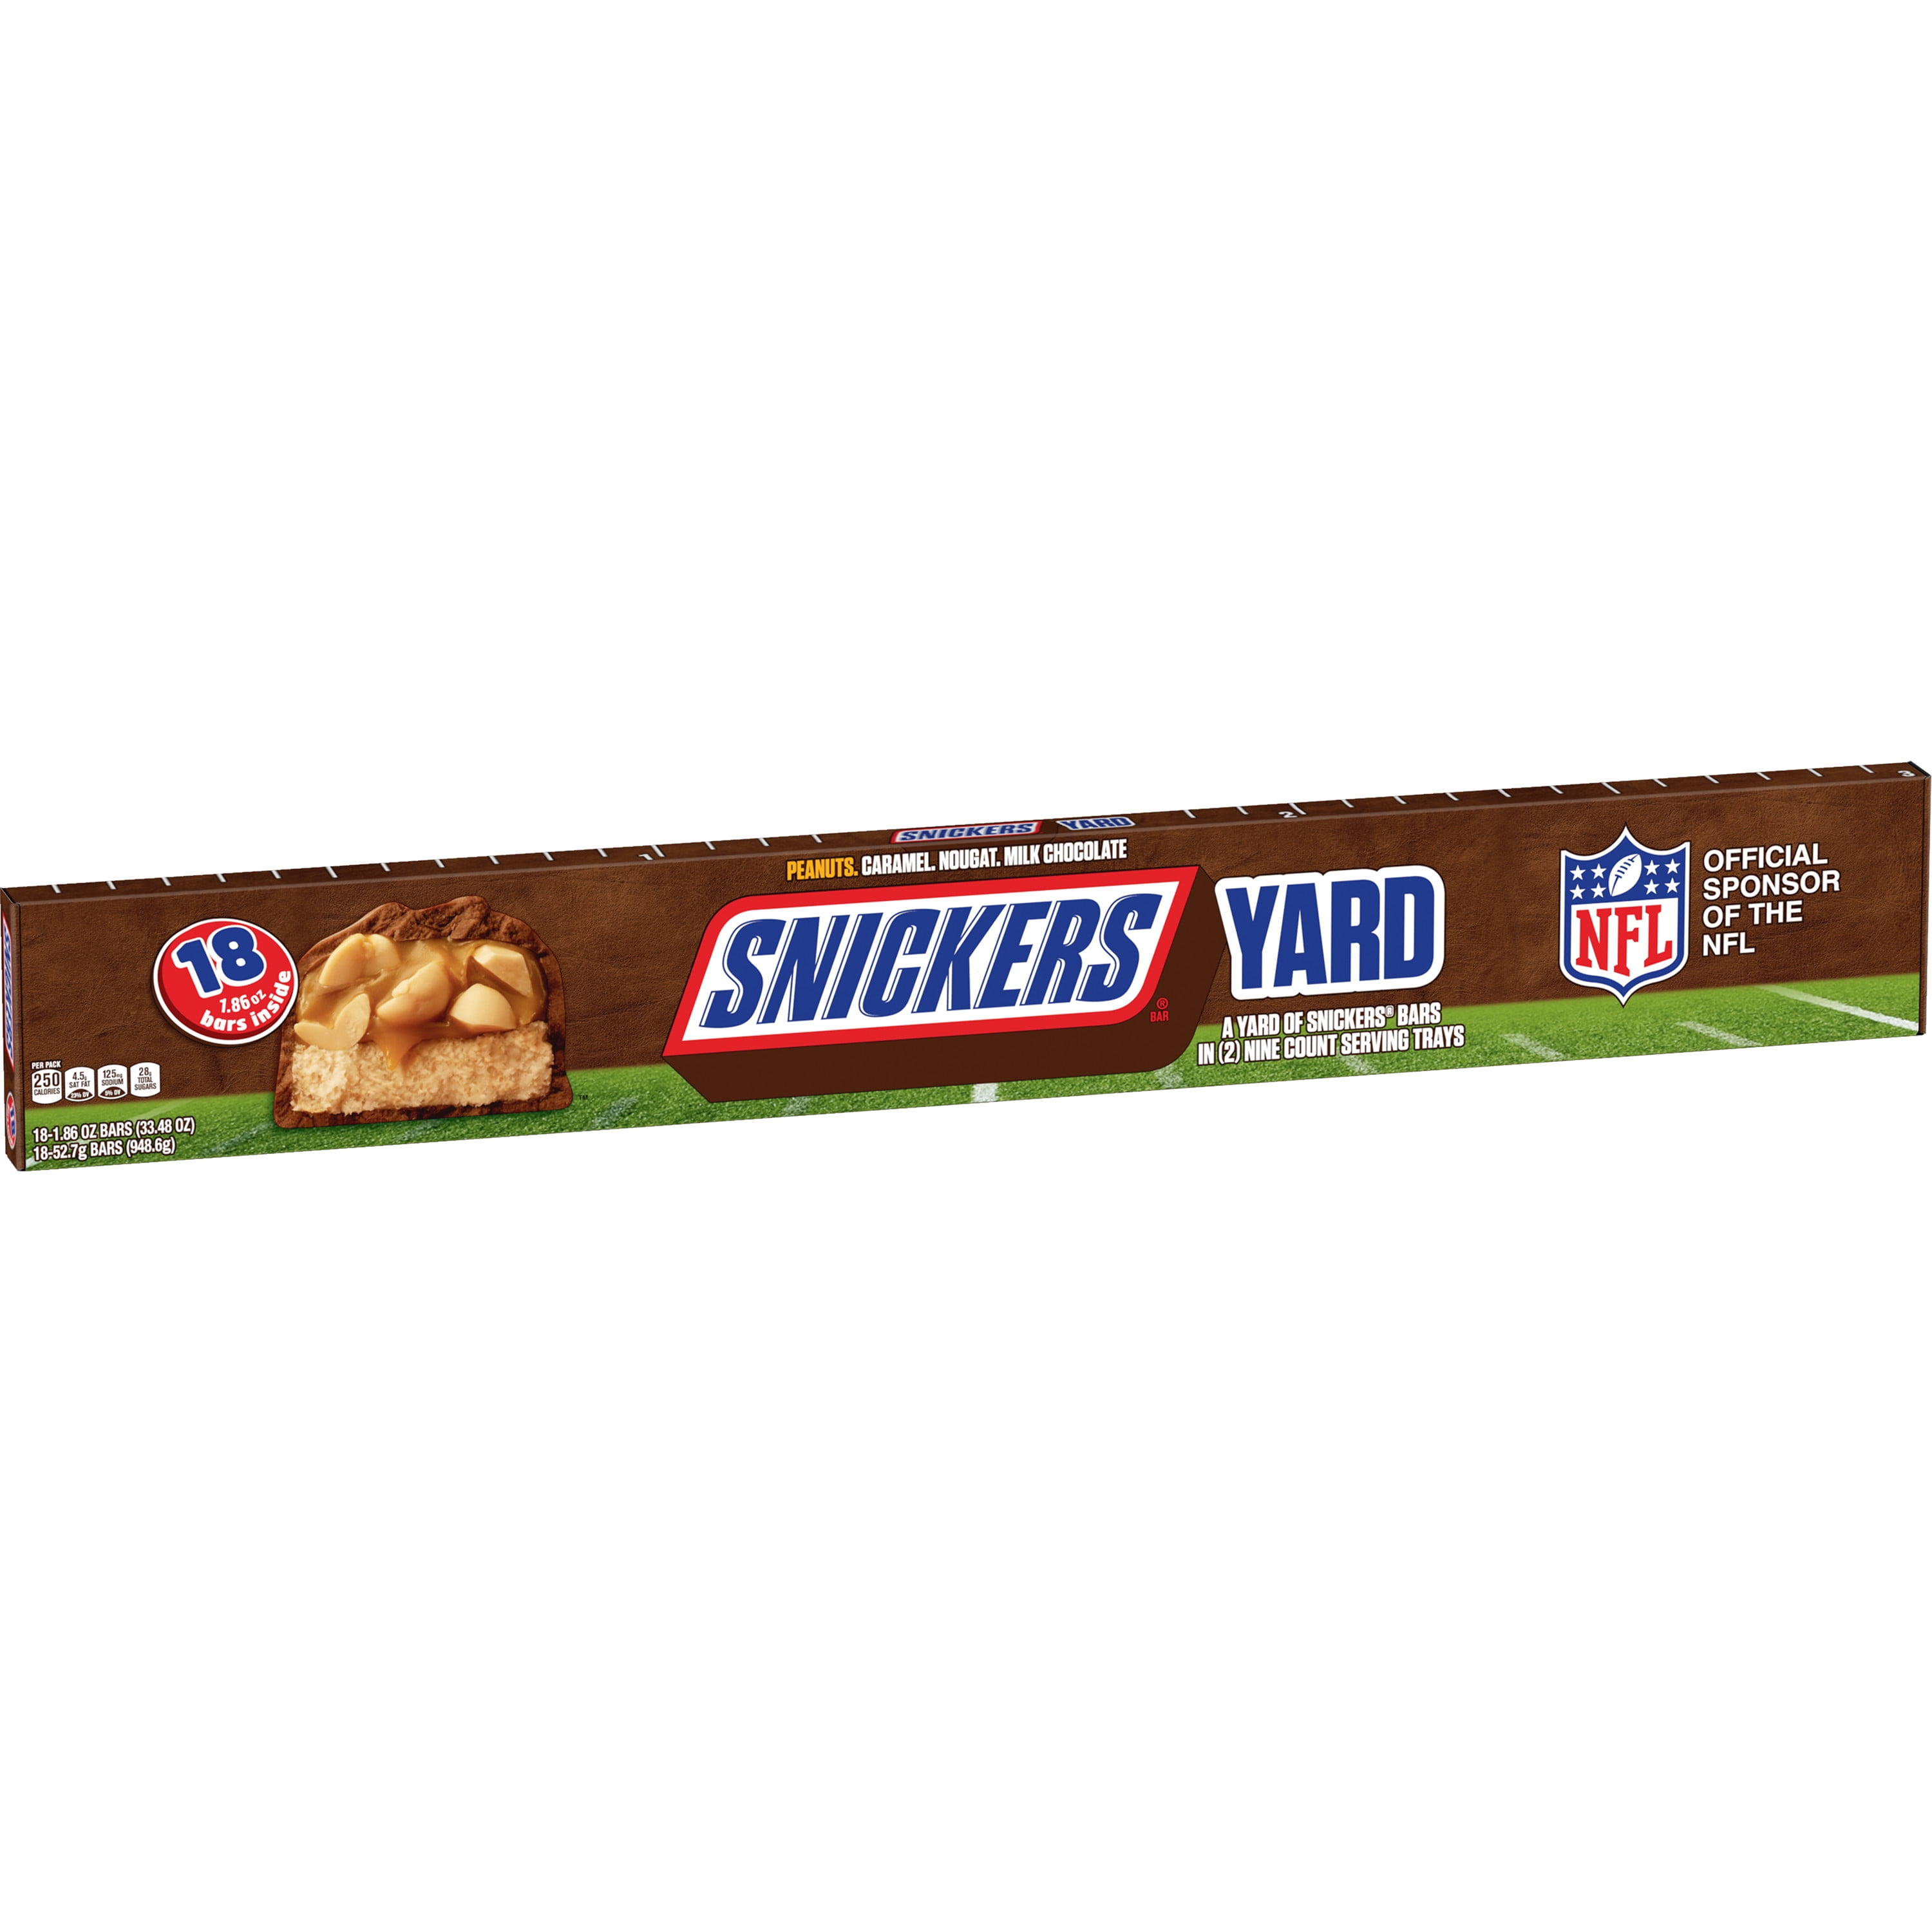 Snickers Holiday Yard Bar Chocolate Christmas Candy Bars- 1.86 oz/18ct